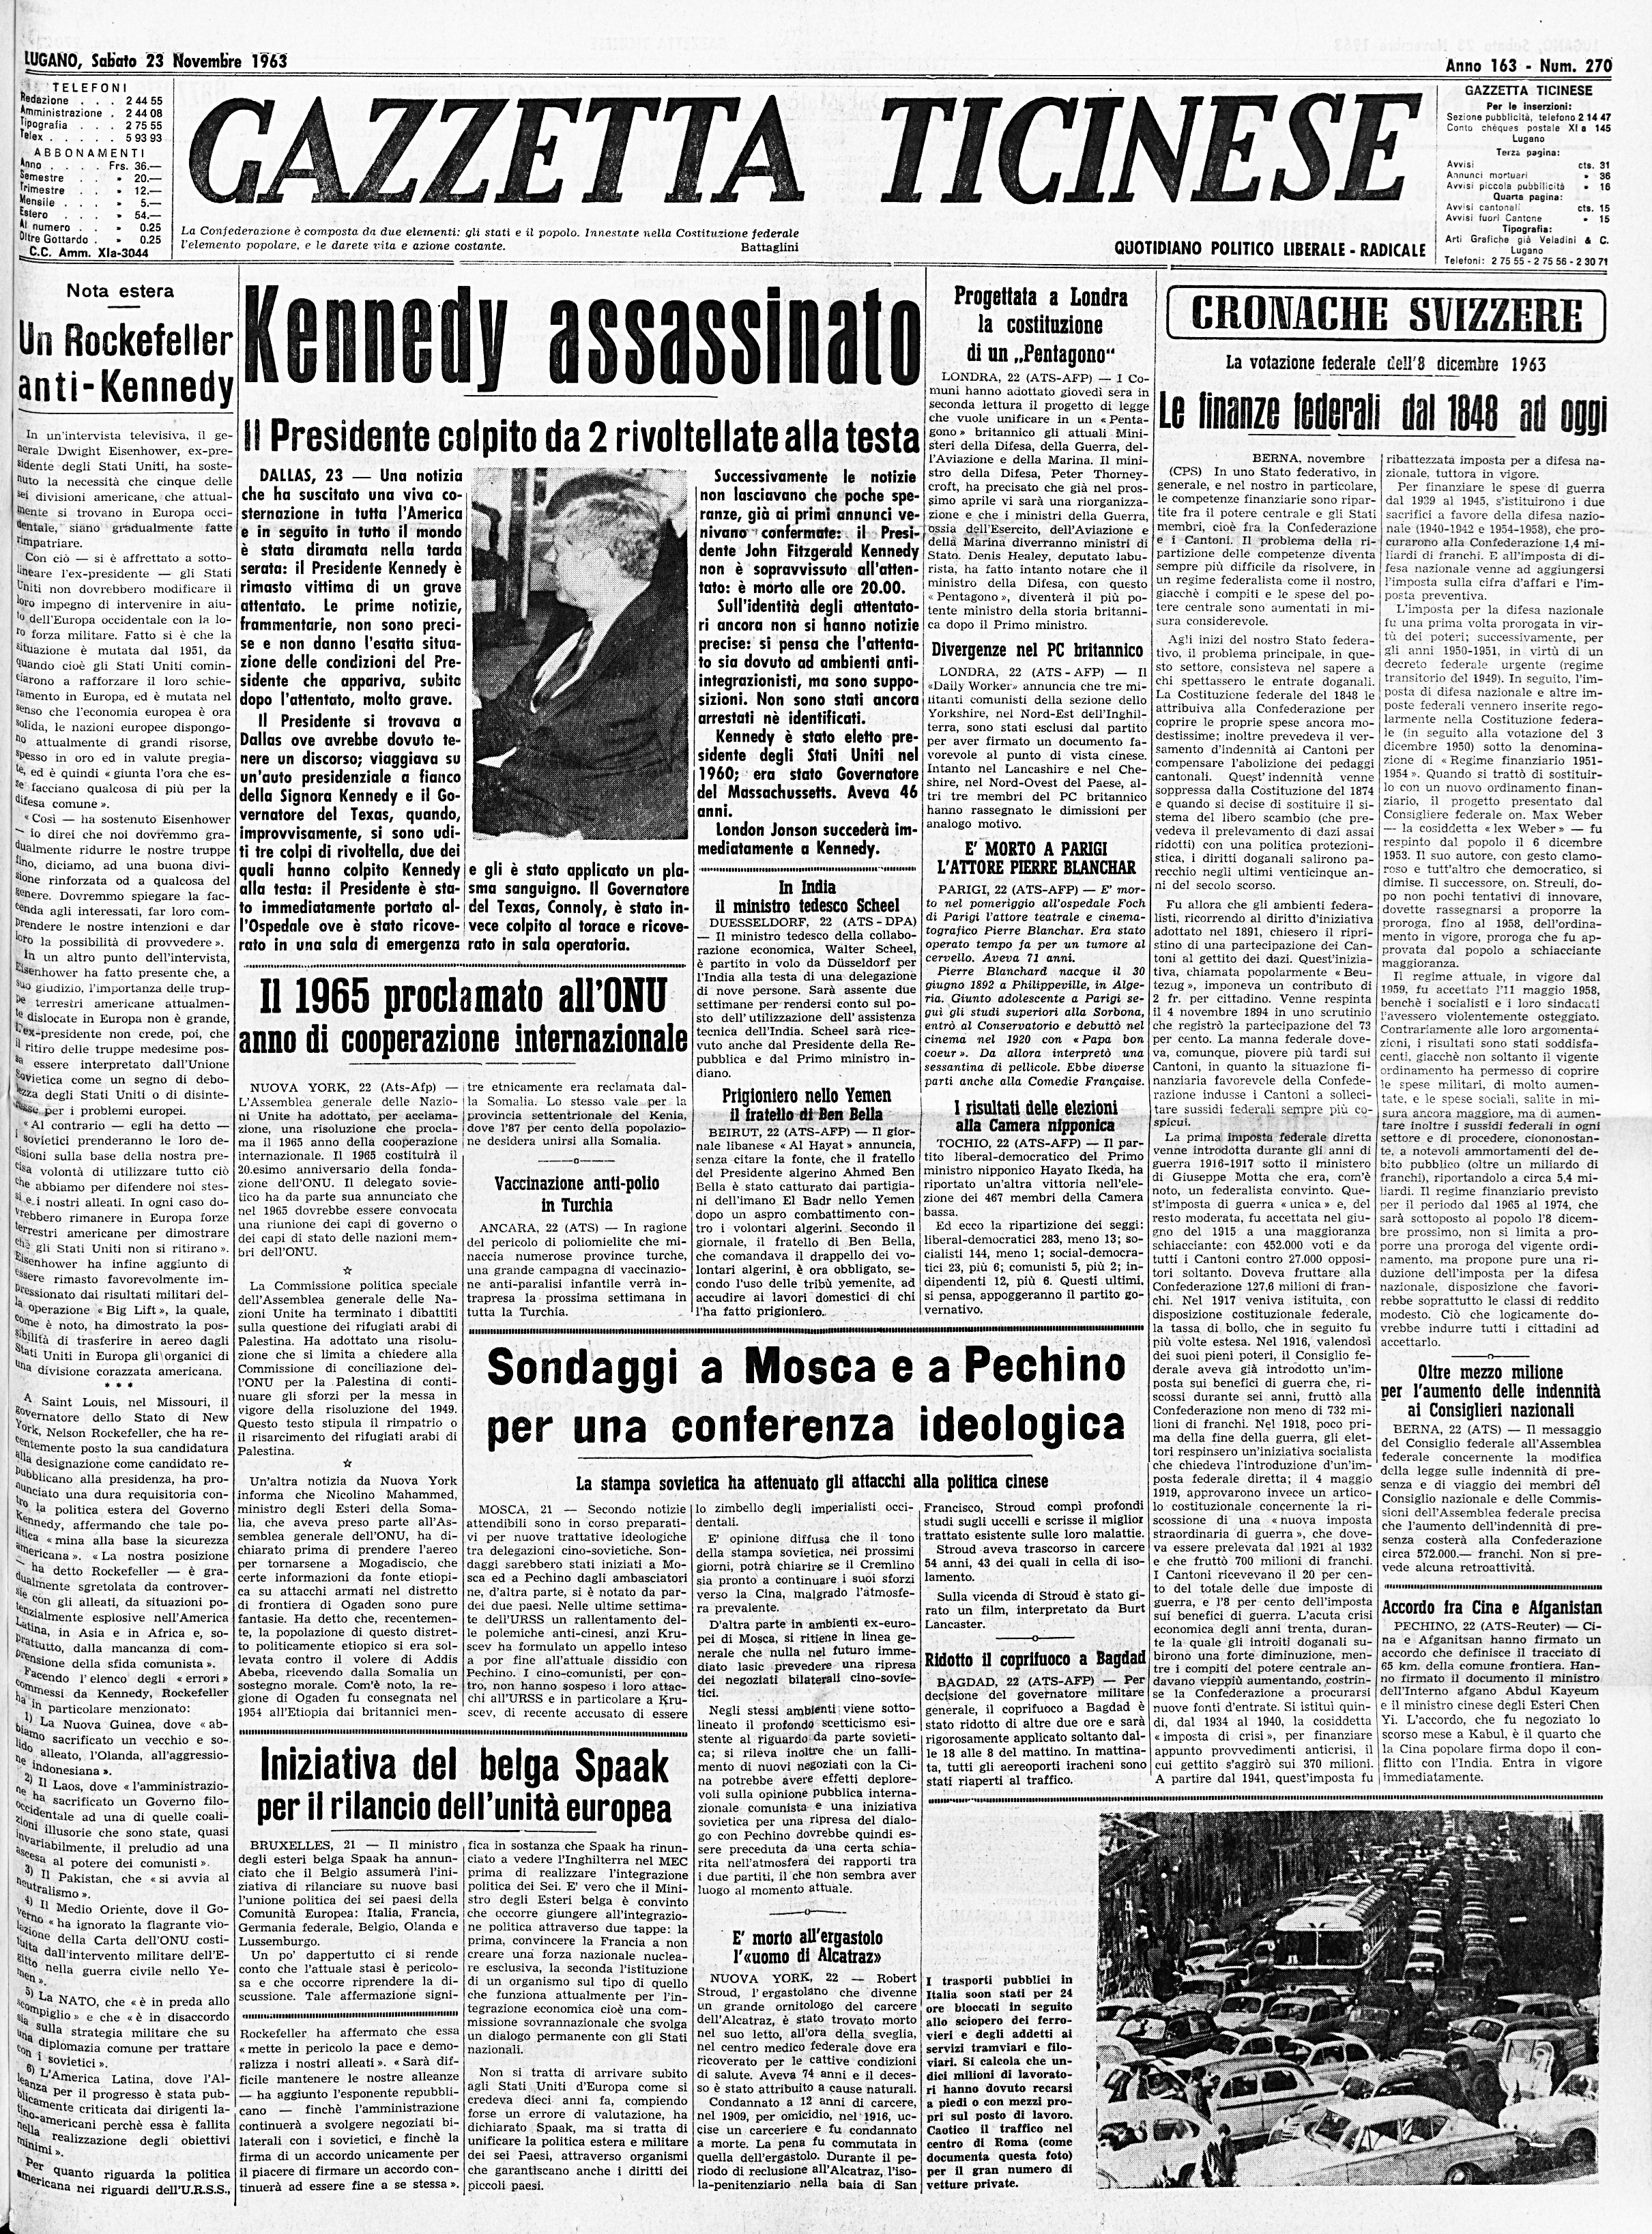 Muerte de JFK en prensa suiza